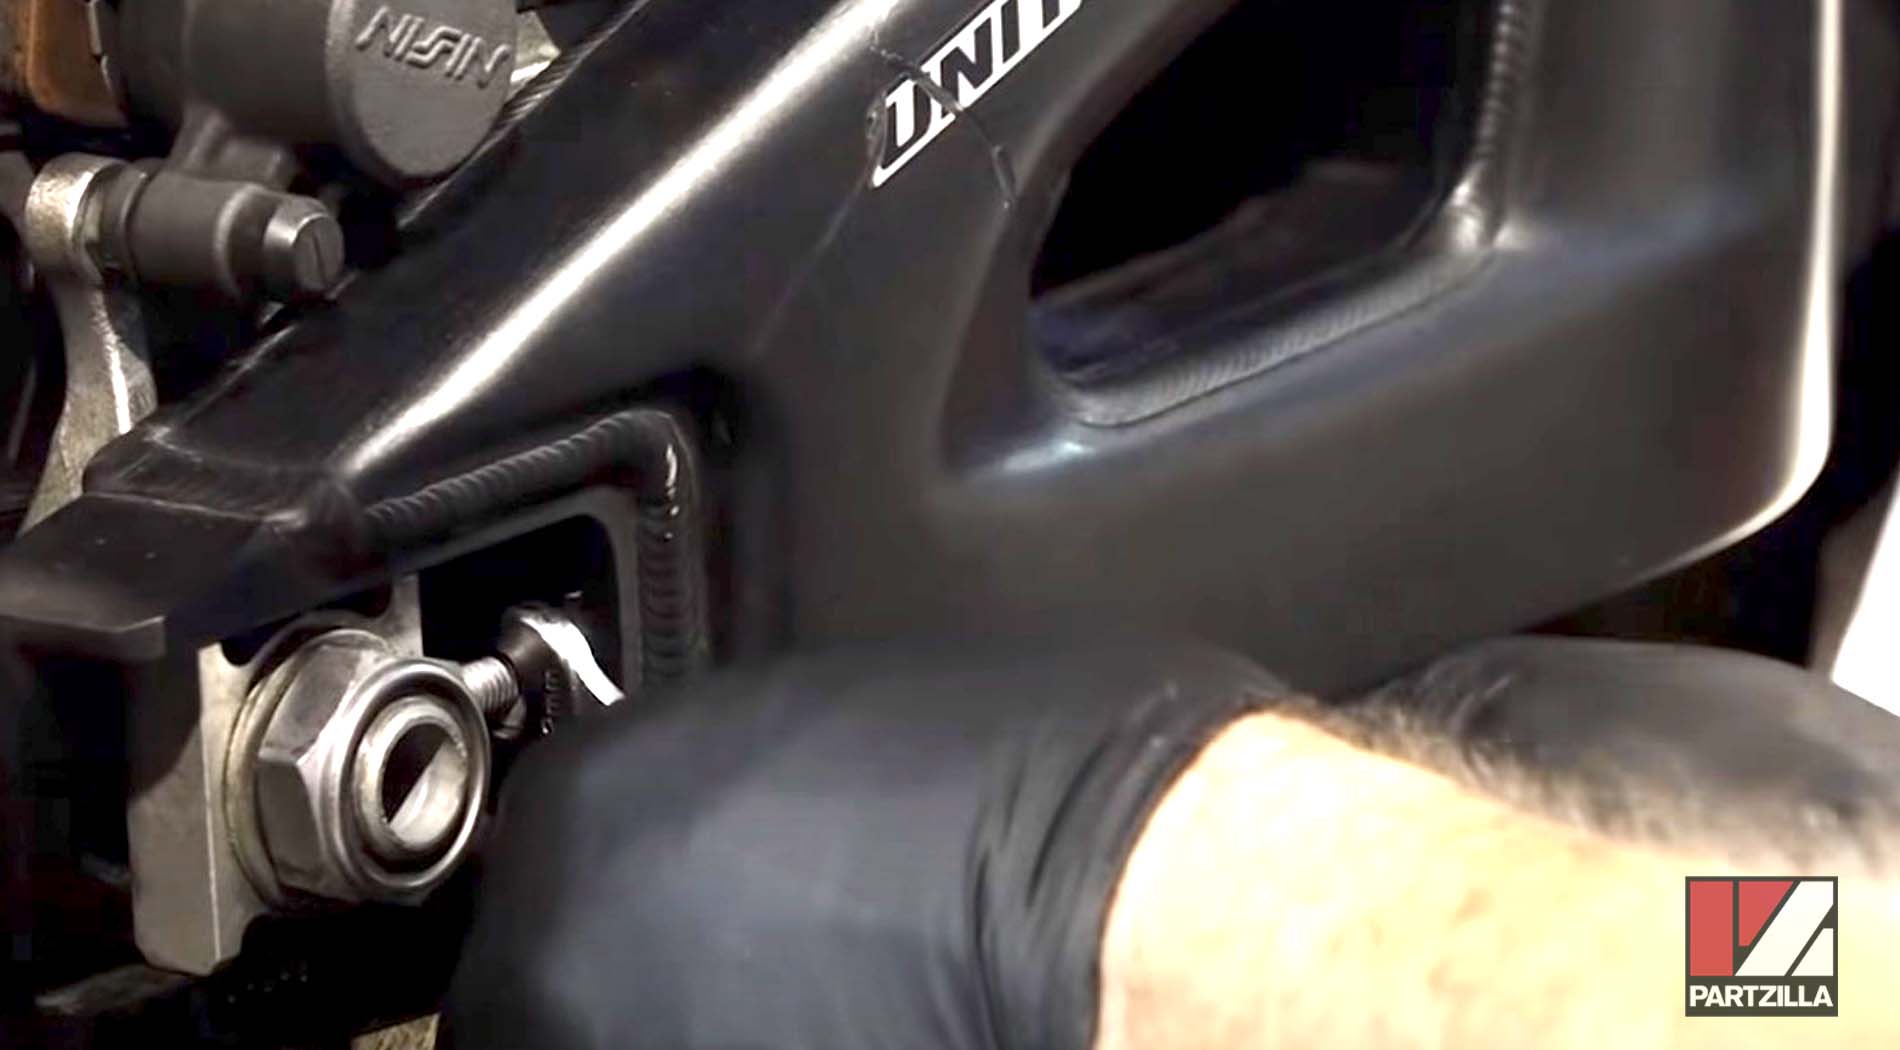 Honda CBR 600RR motorcycle chain adjustment